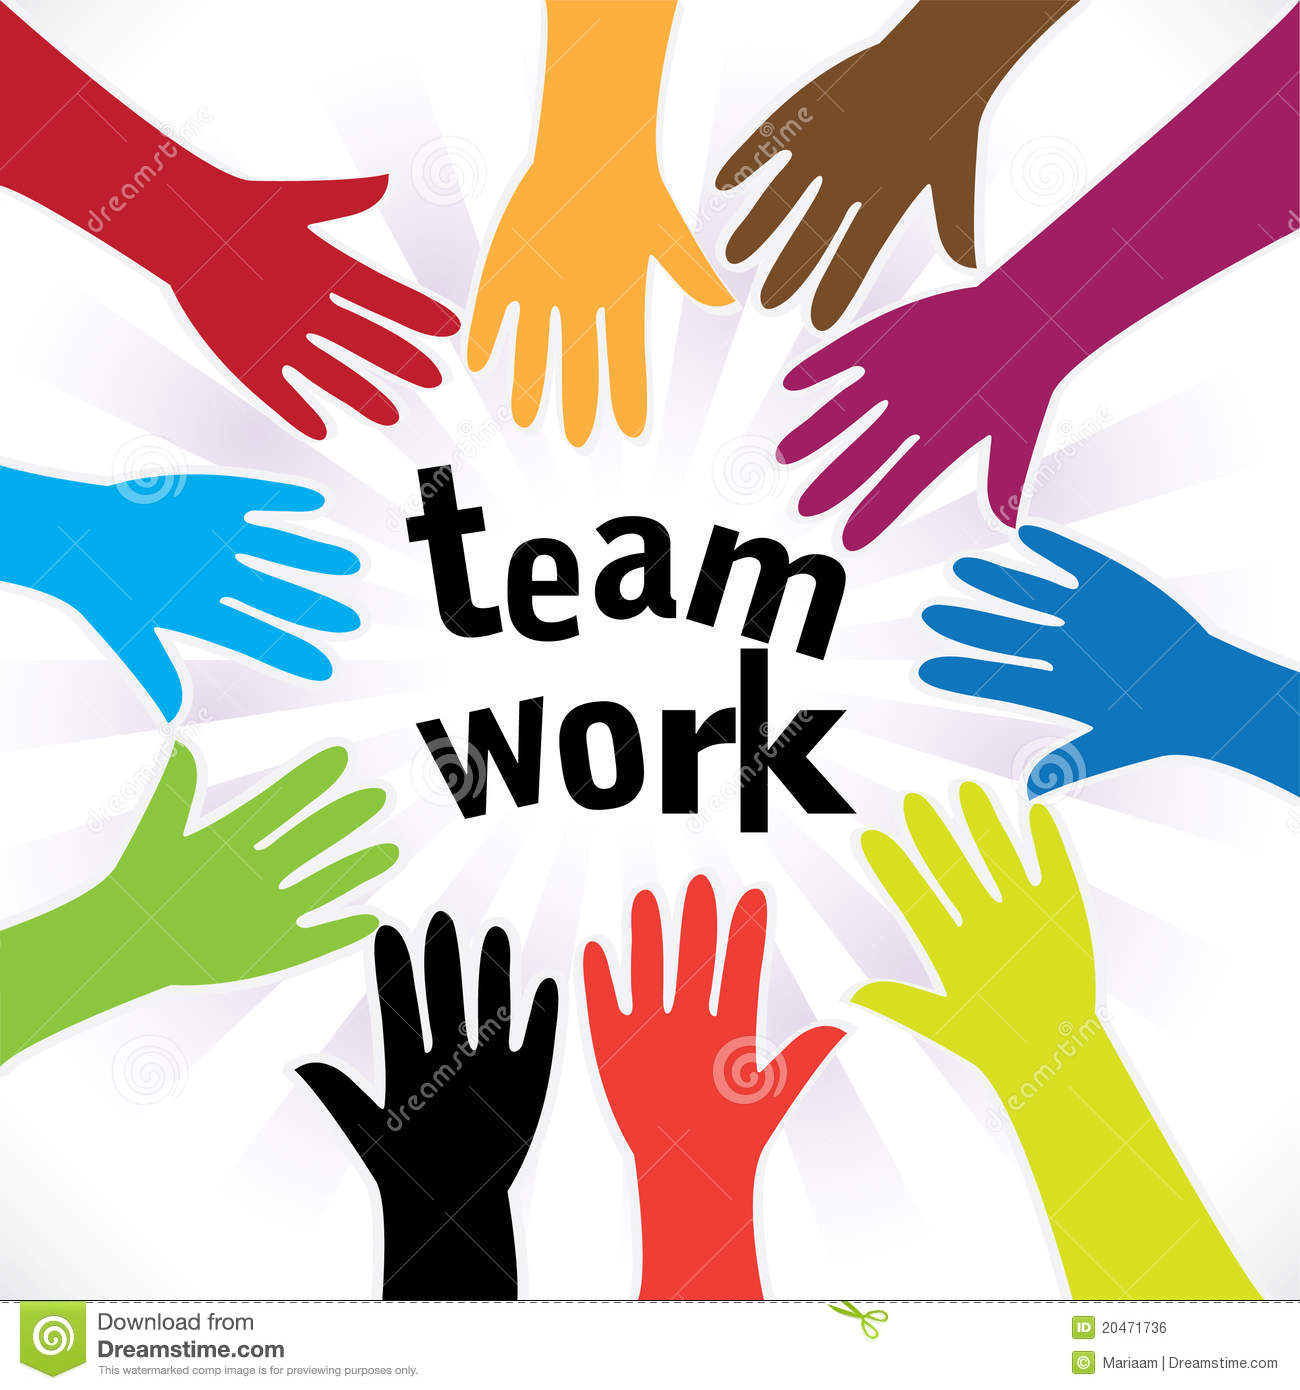 teamwork-gayaz-ahmed